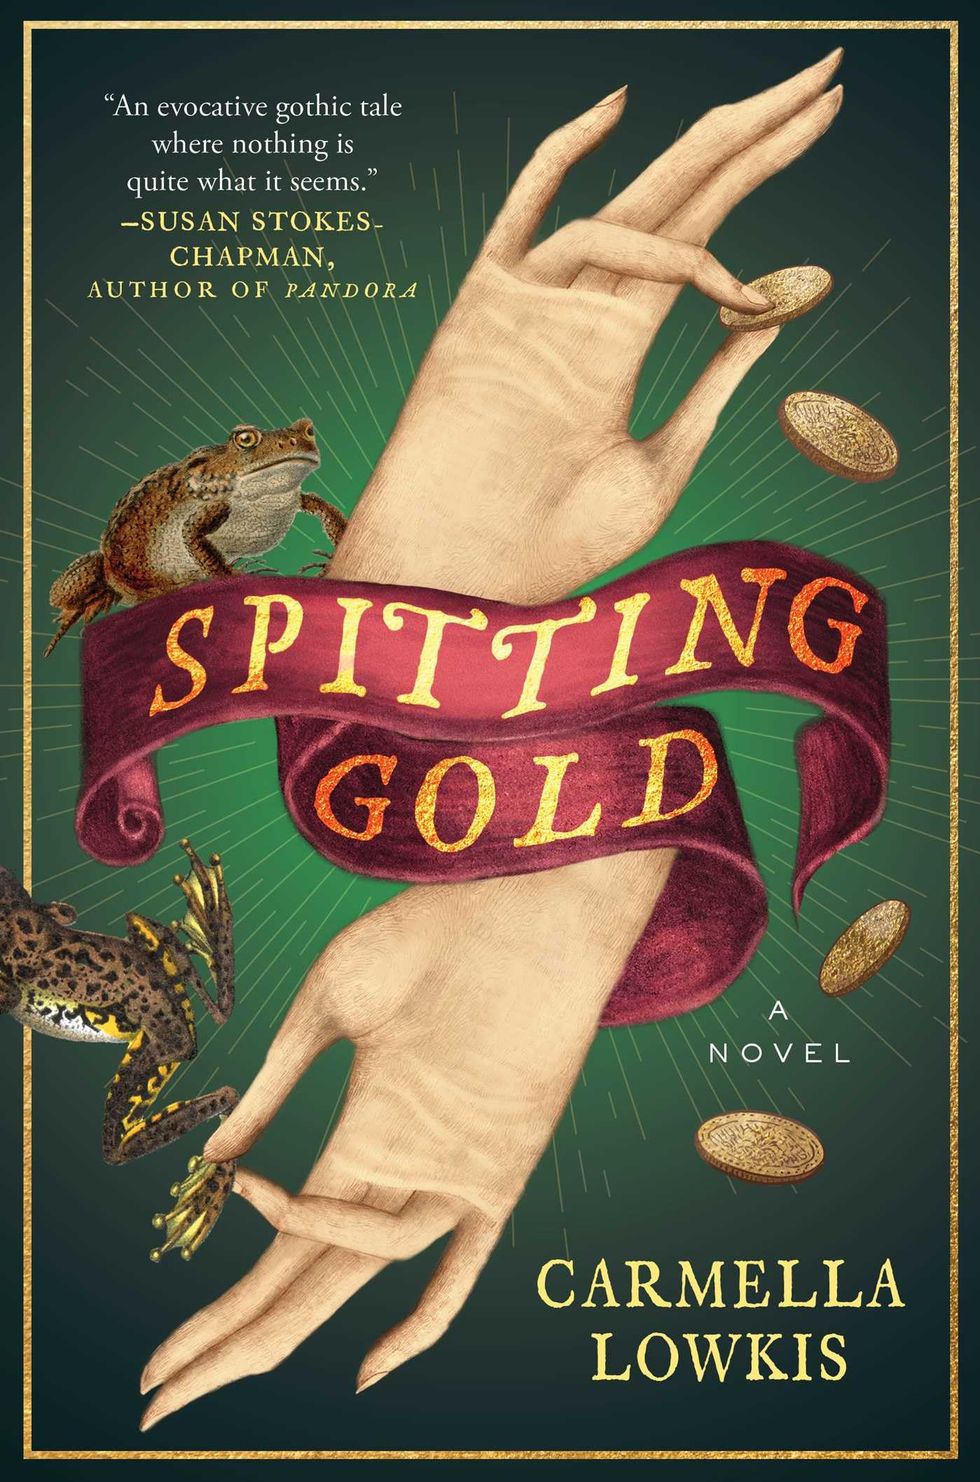 'Spitting Gold: A Novel' by Carmella Lowkis